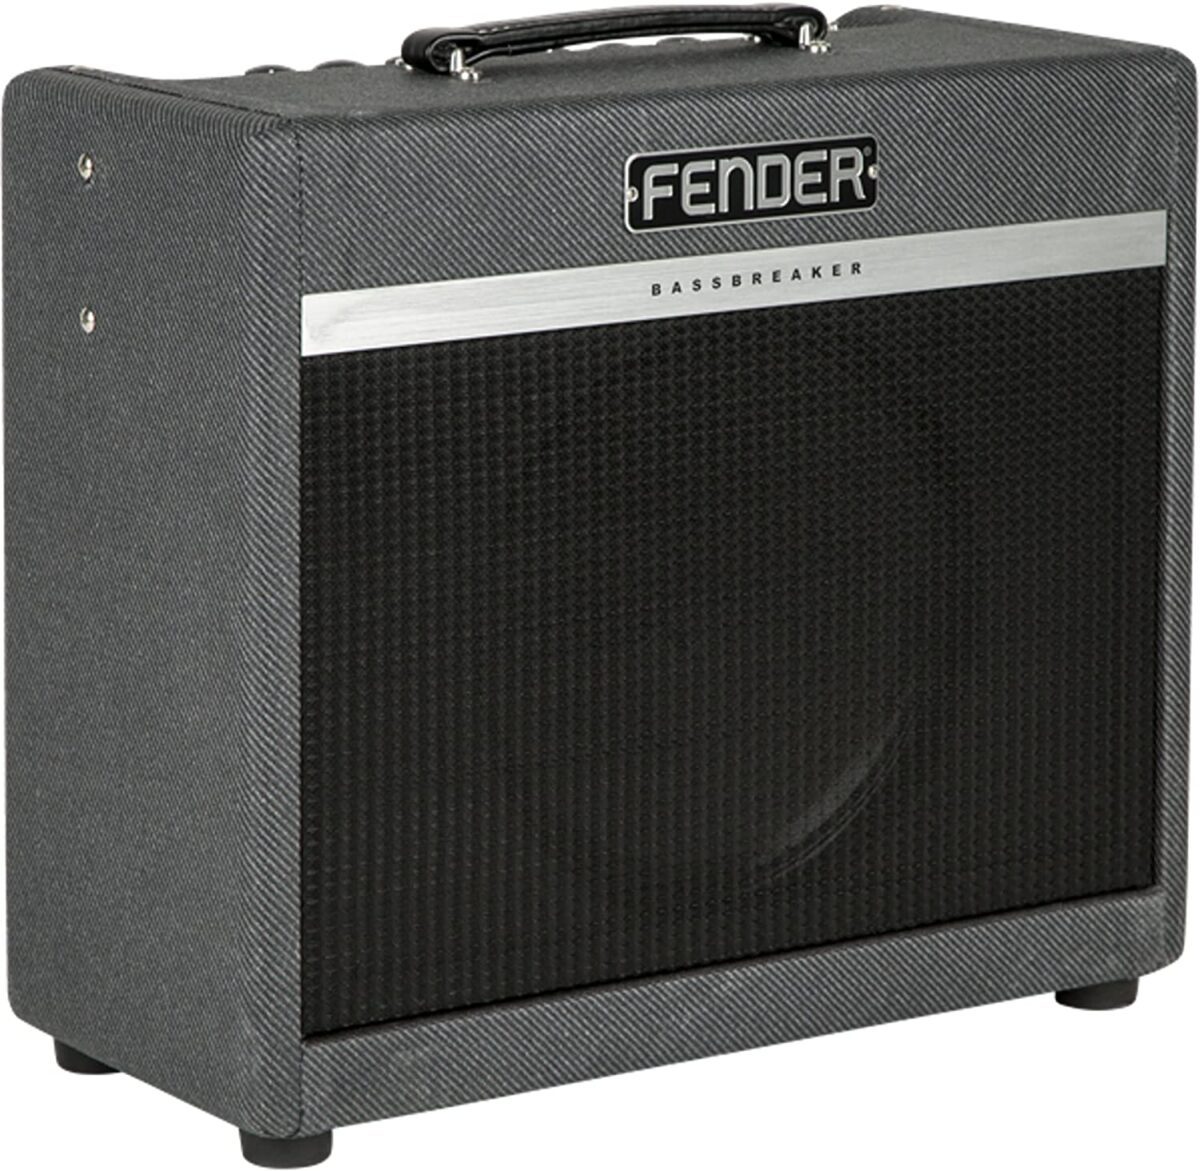 Fender Bassbreaker 15 Combo Guitar Amplifier